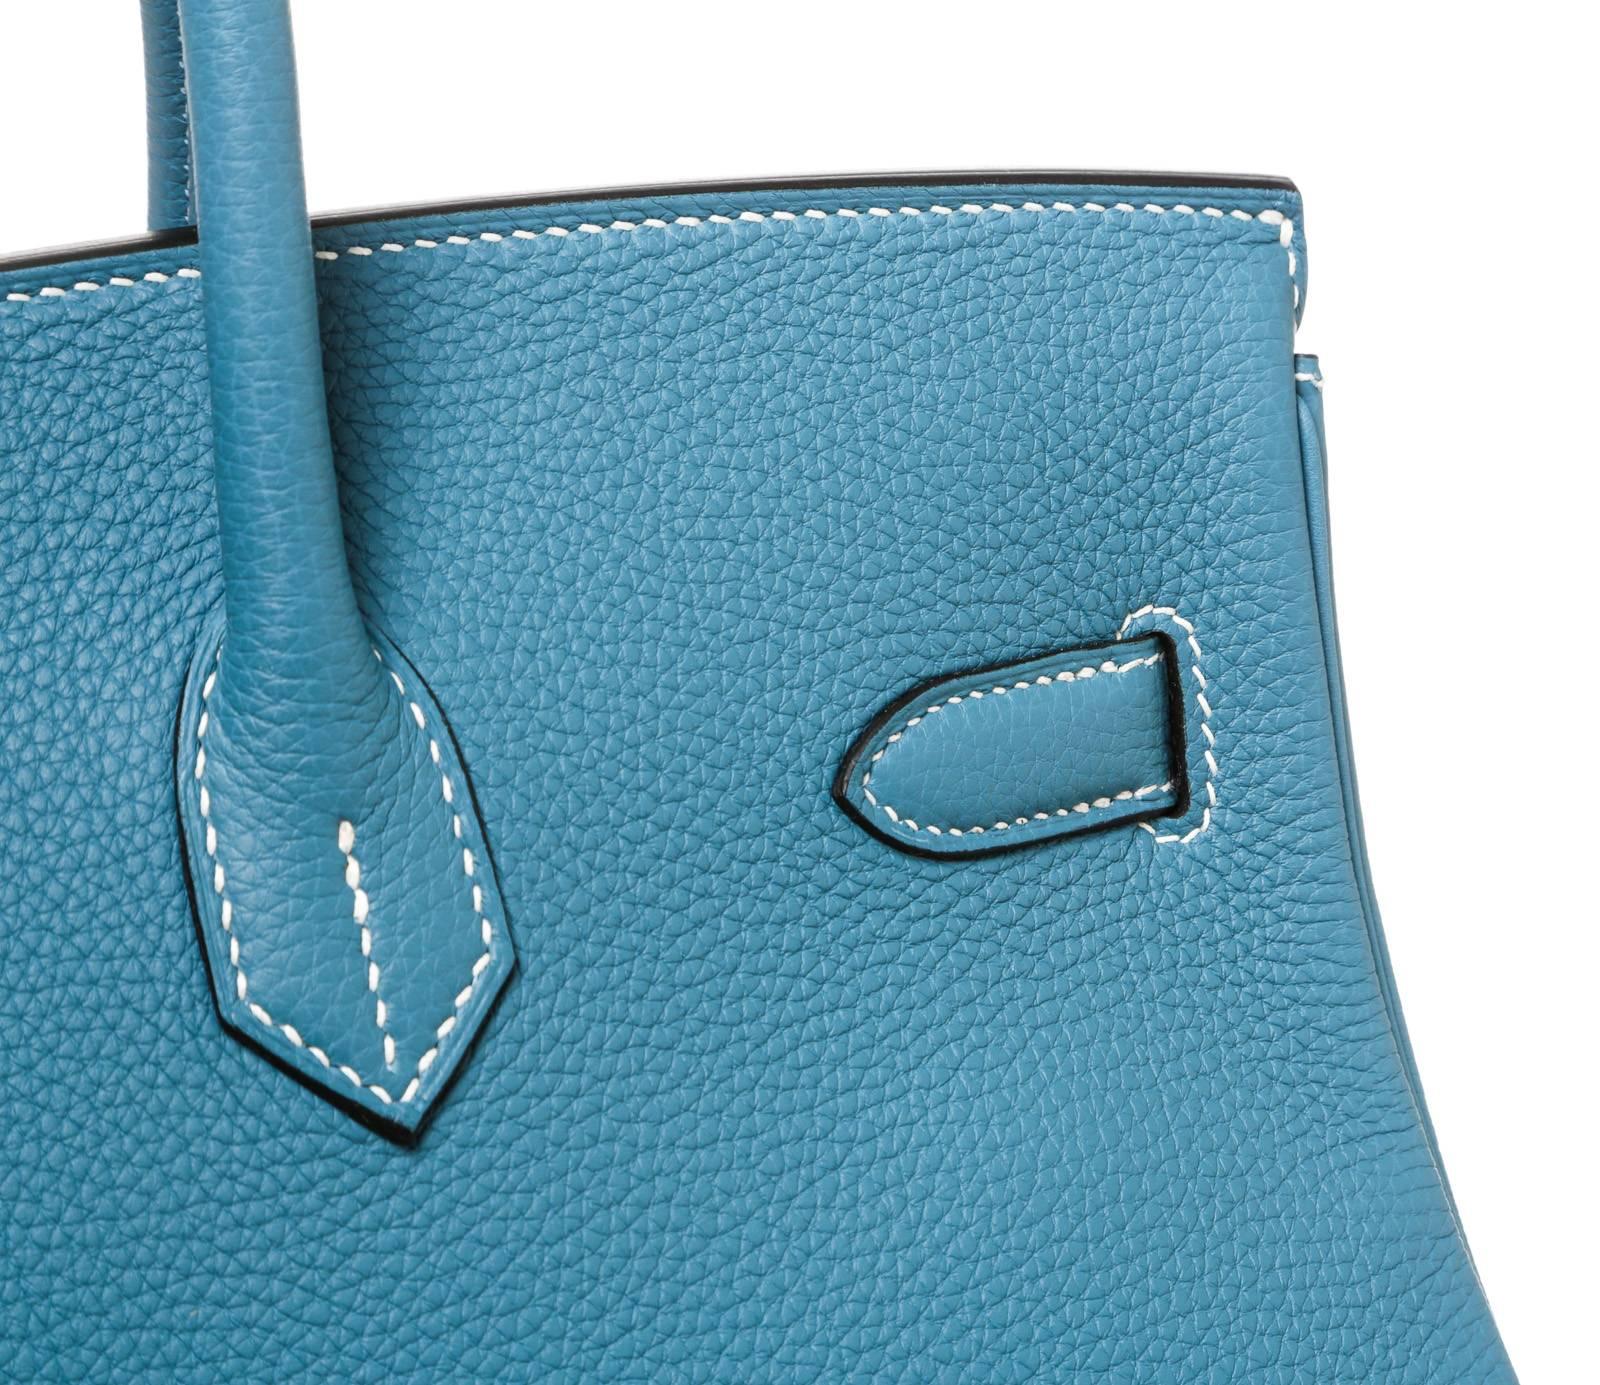 Women's Hermes Bleu Jean Togo Leather Birkin 35cm Handbag SHW For Sale